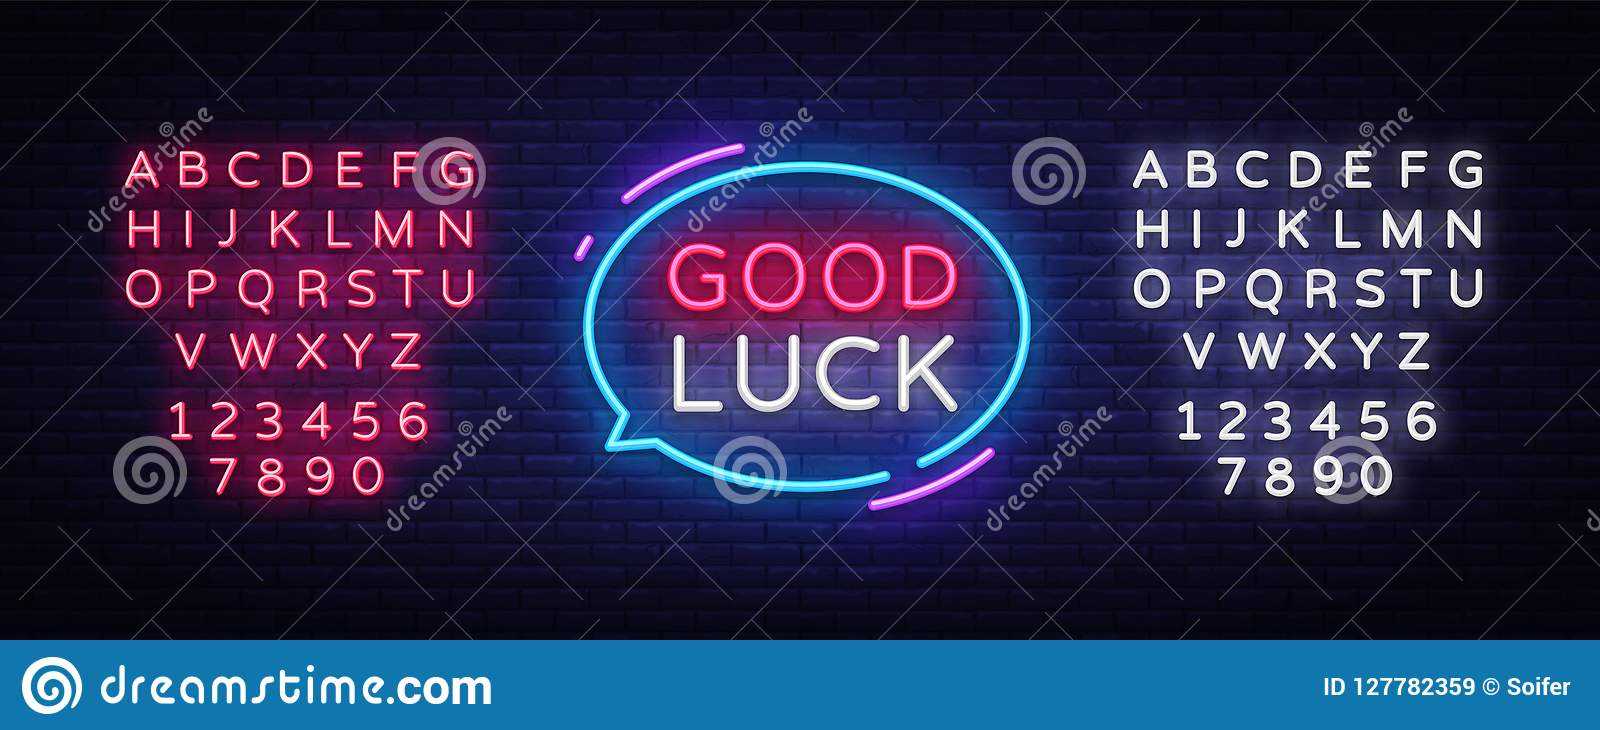 Good Luck Neon Text Vector. Good Luck Neon Sign, Design With Good Luck Banner Template